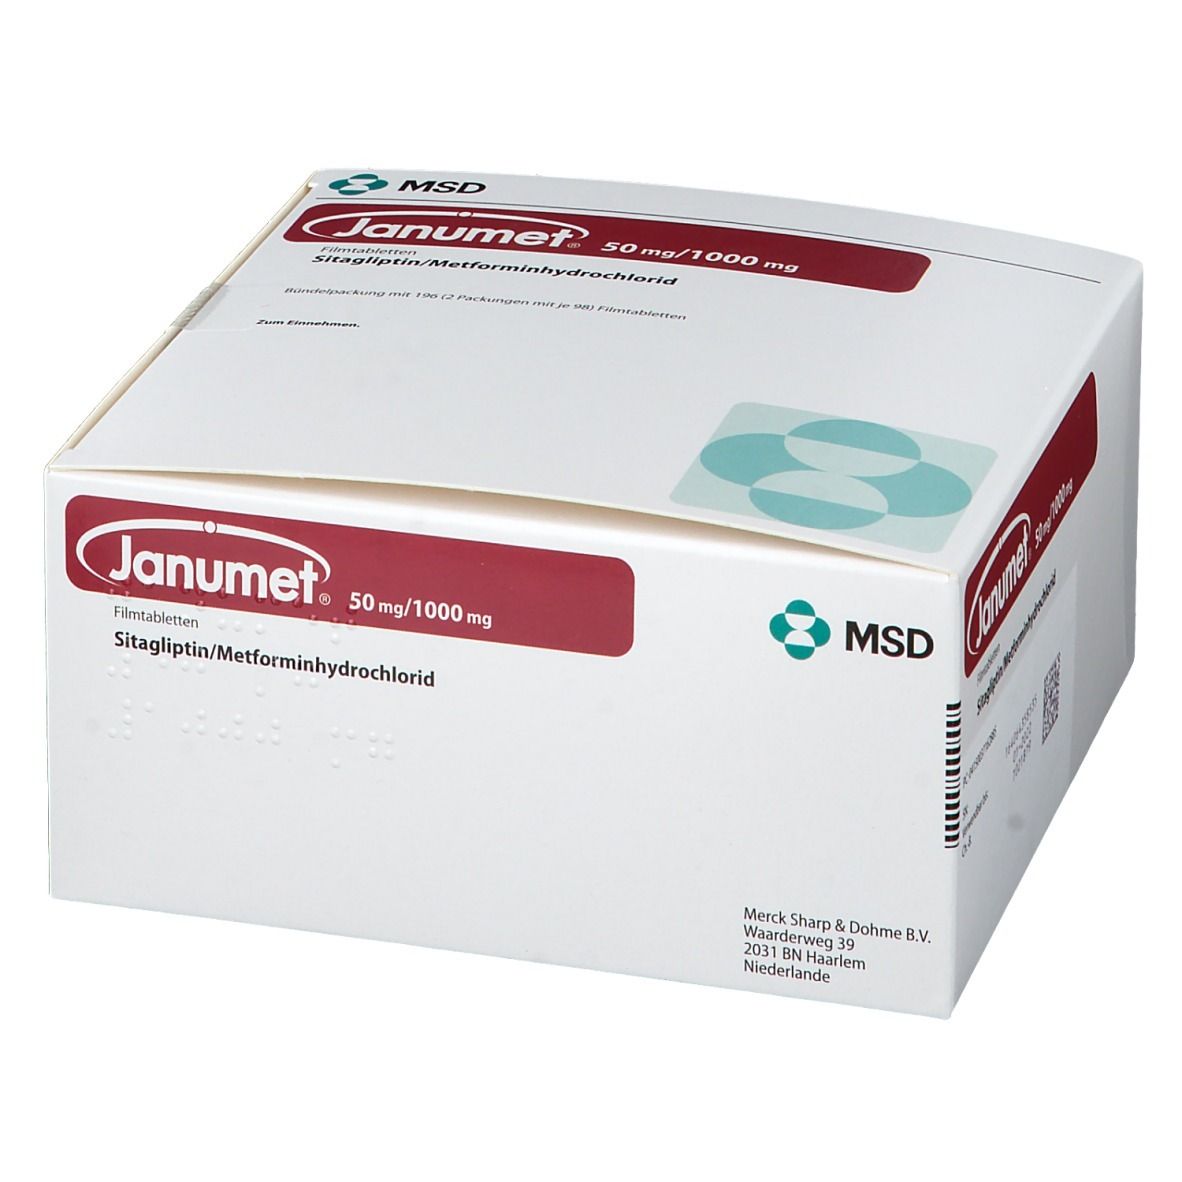 Janumet® 50 mg/1000 mg